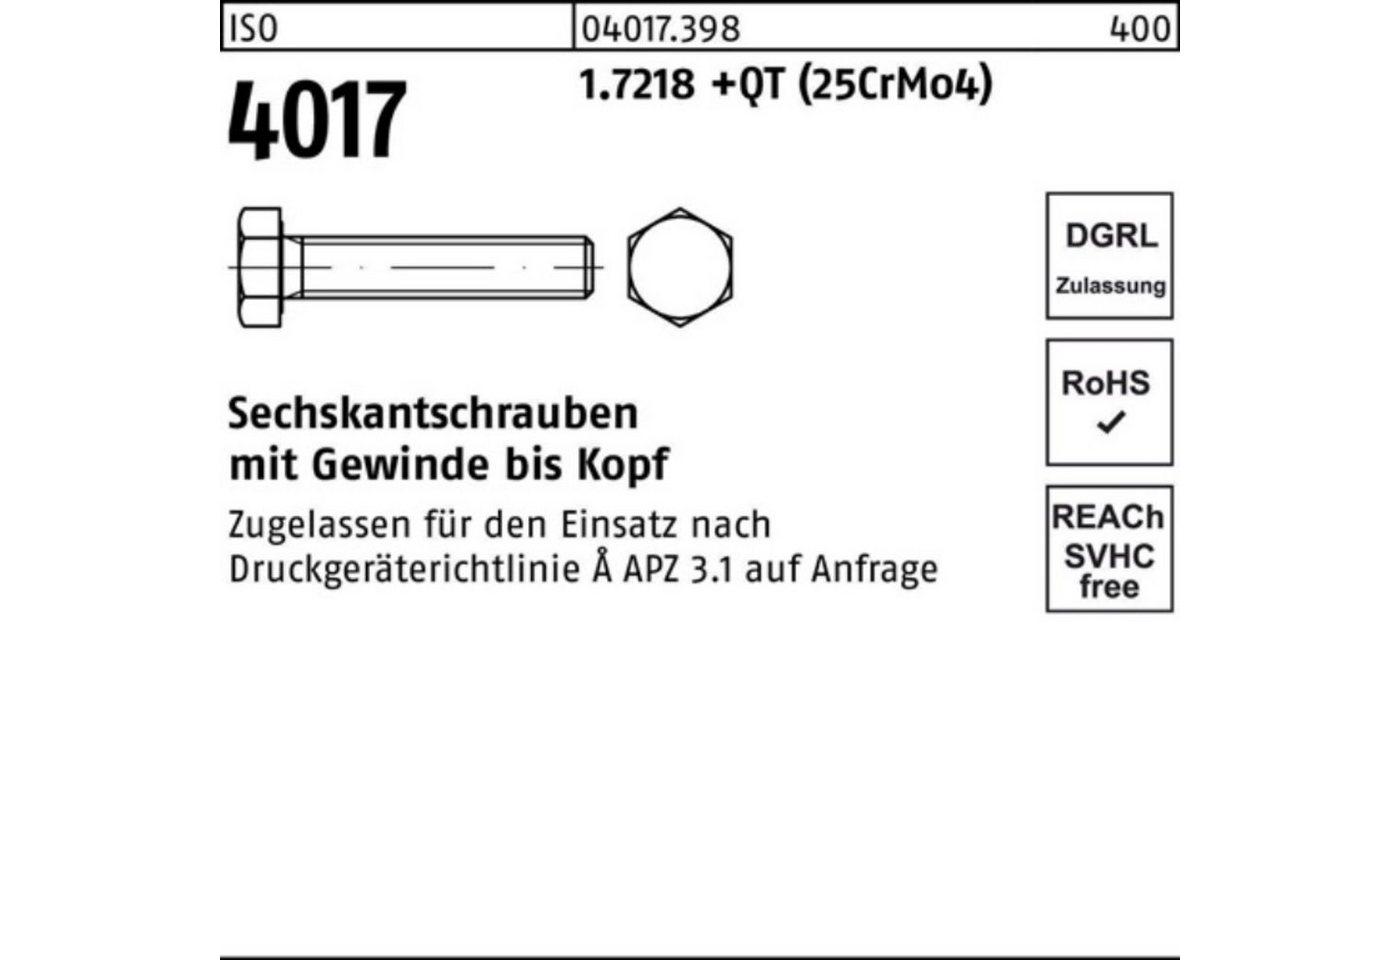 Bufab Sechskantschraube 100er Pack Sechskantschraube ISO 4017 VG M16x 30 1.7218 +QT (25CrMo4) von Bufab